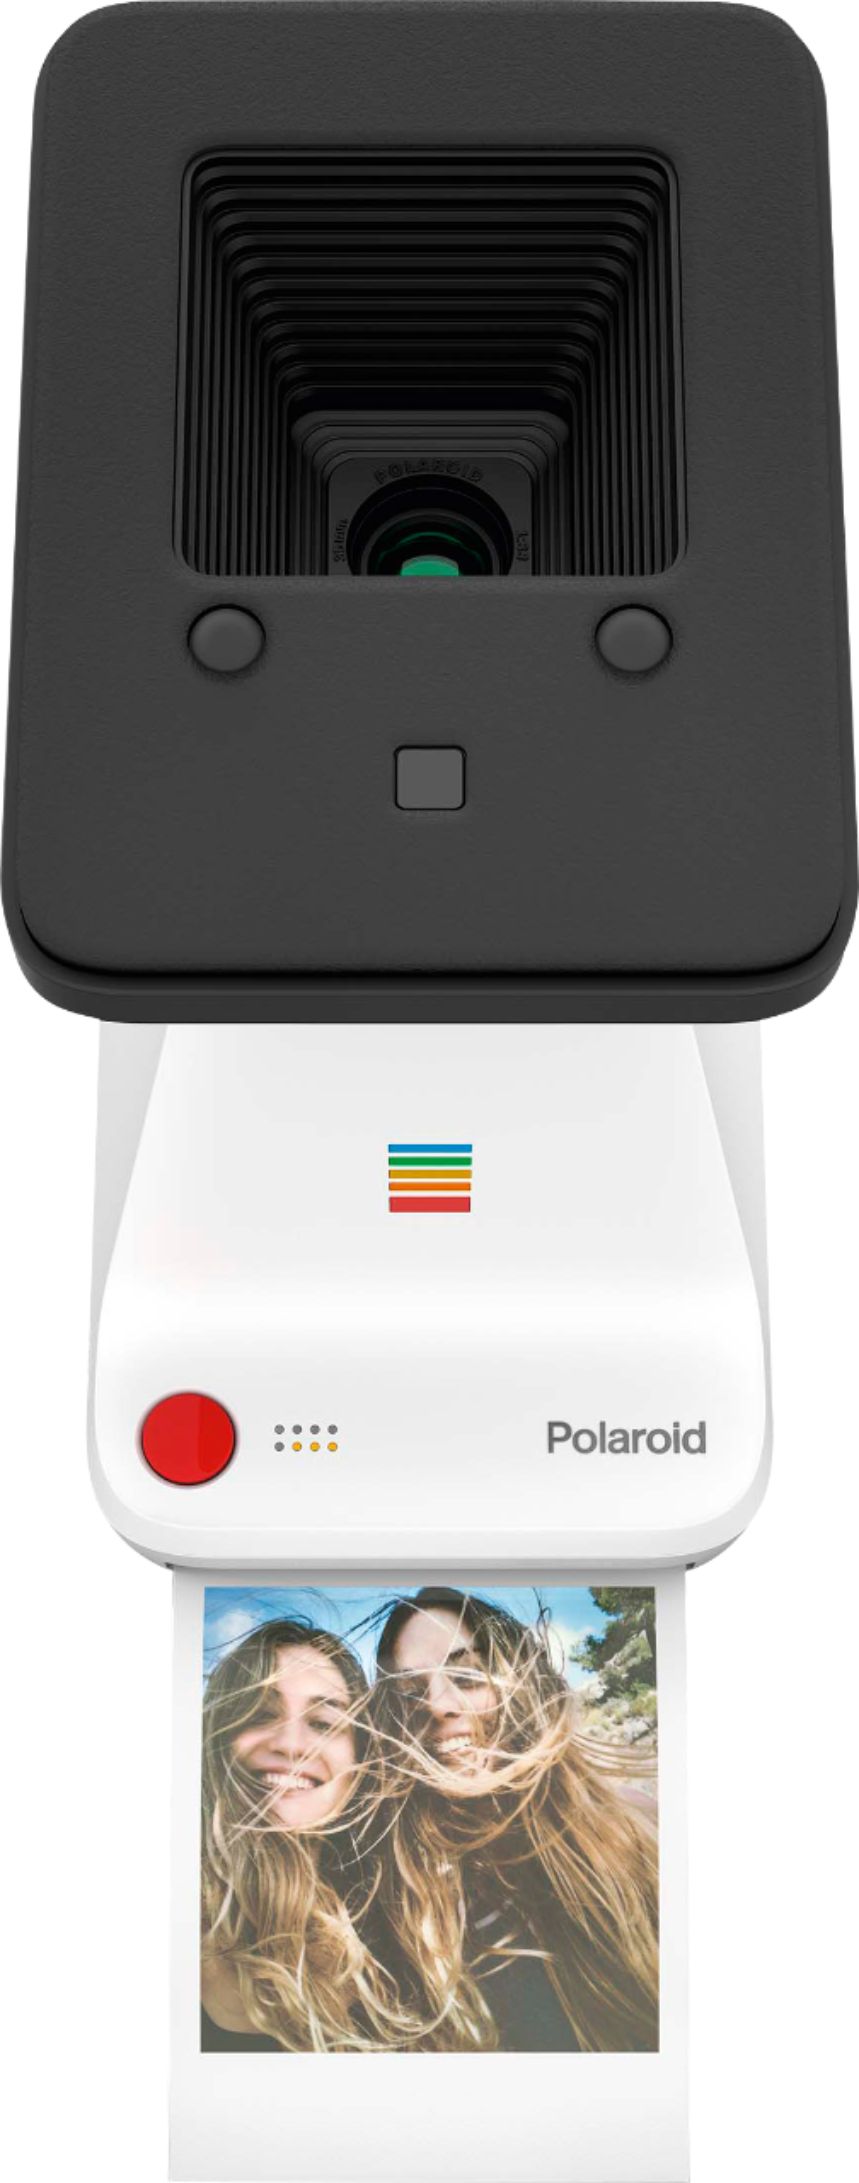  Polaroid Lab - Impresora fotográfica Polaroid digital a  analógica (renovada Premium), color blanco : Electrónica